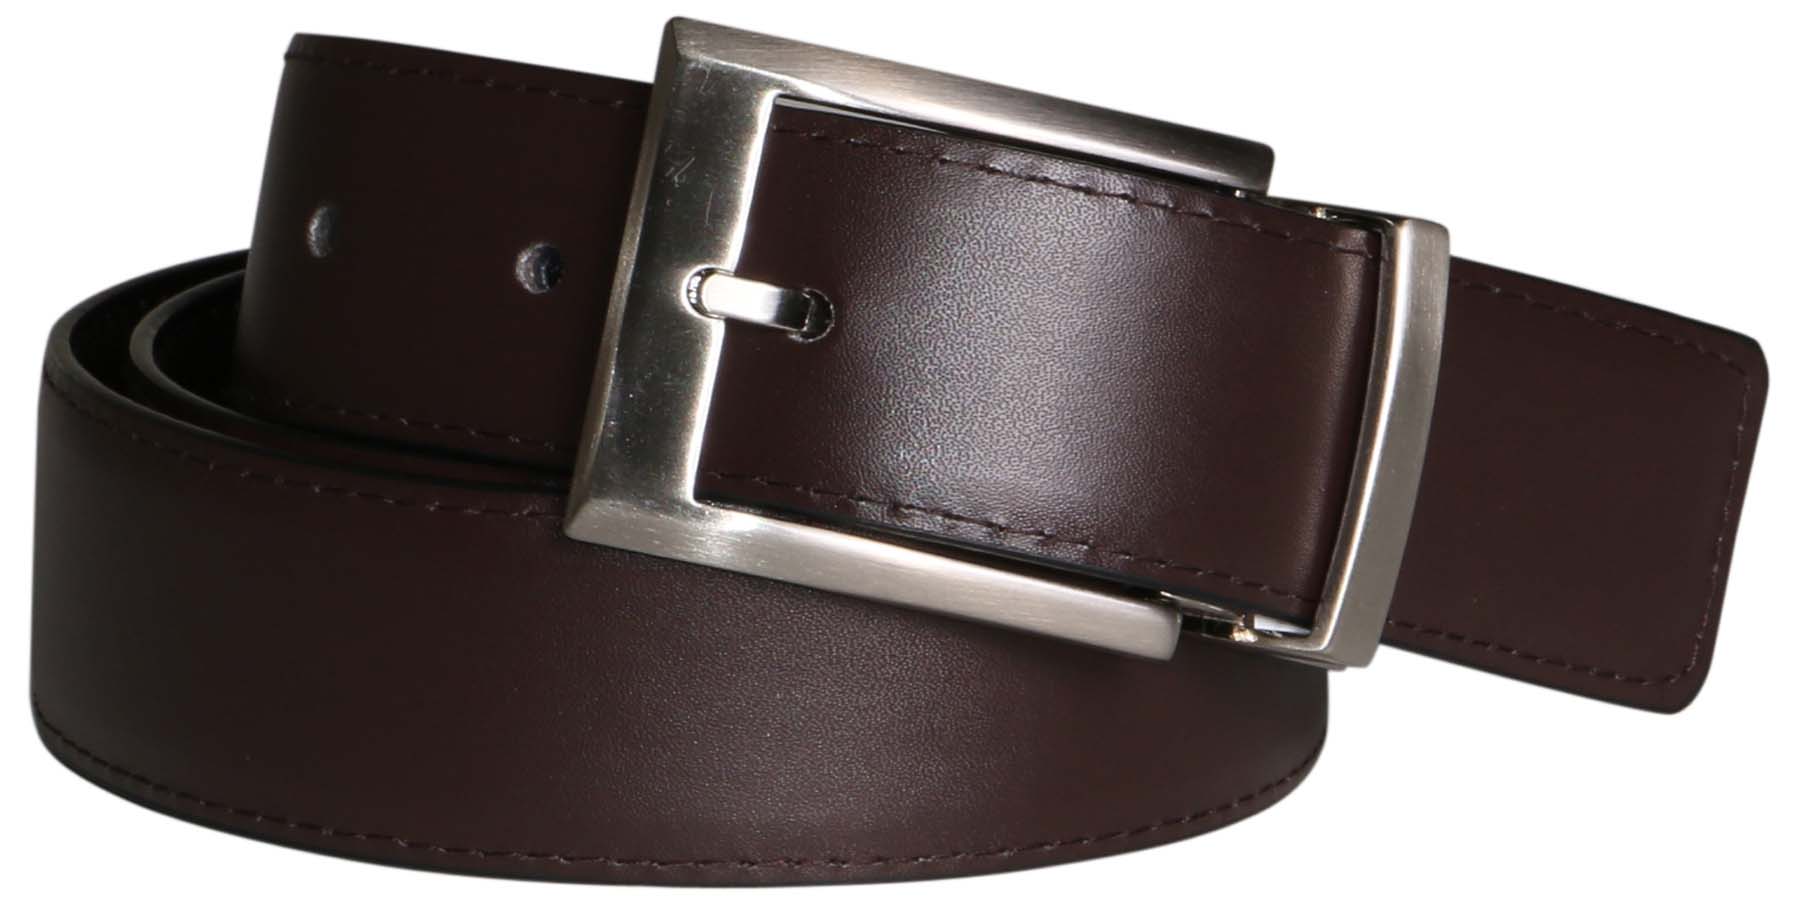 Calvin Klein Men's Reversible Leather Belt - image 2 of 2